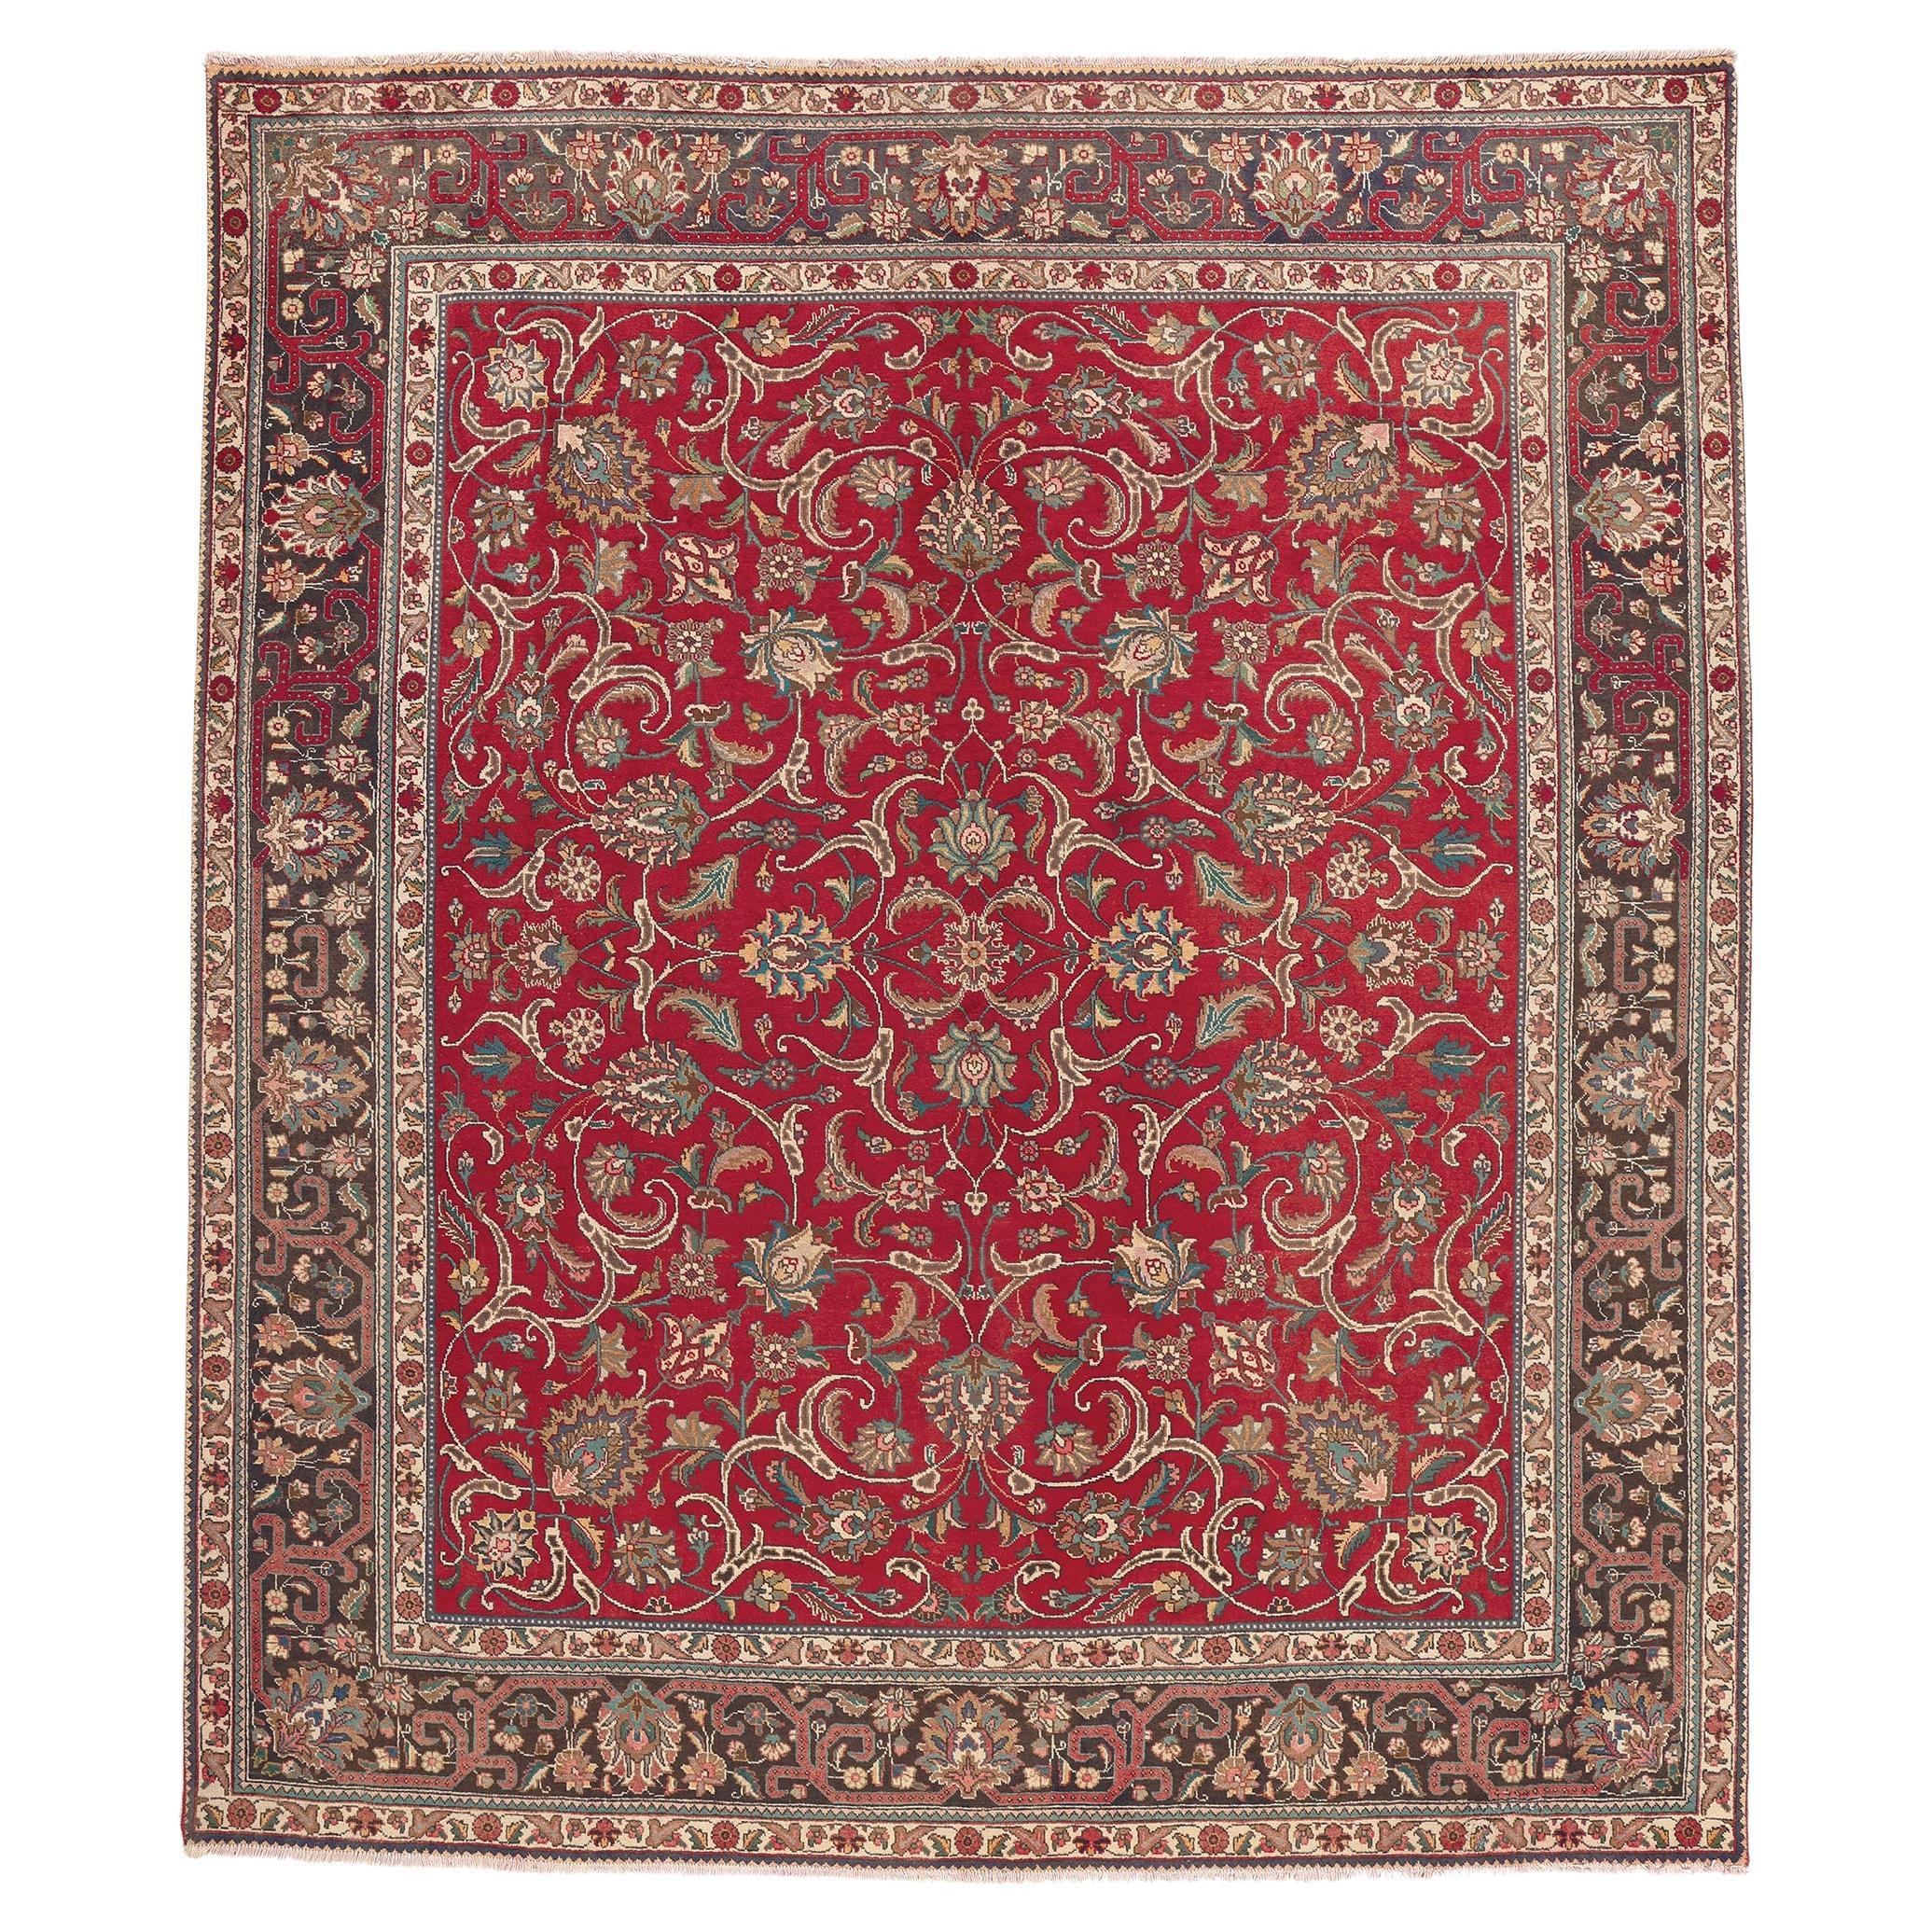 Vintage Persian Tabriz Rug, Classic Elegance Meets Timeless Beauty